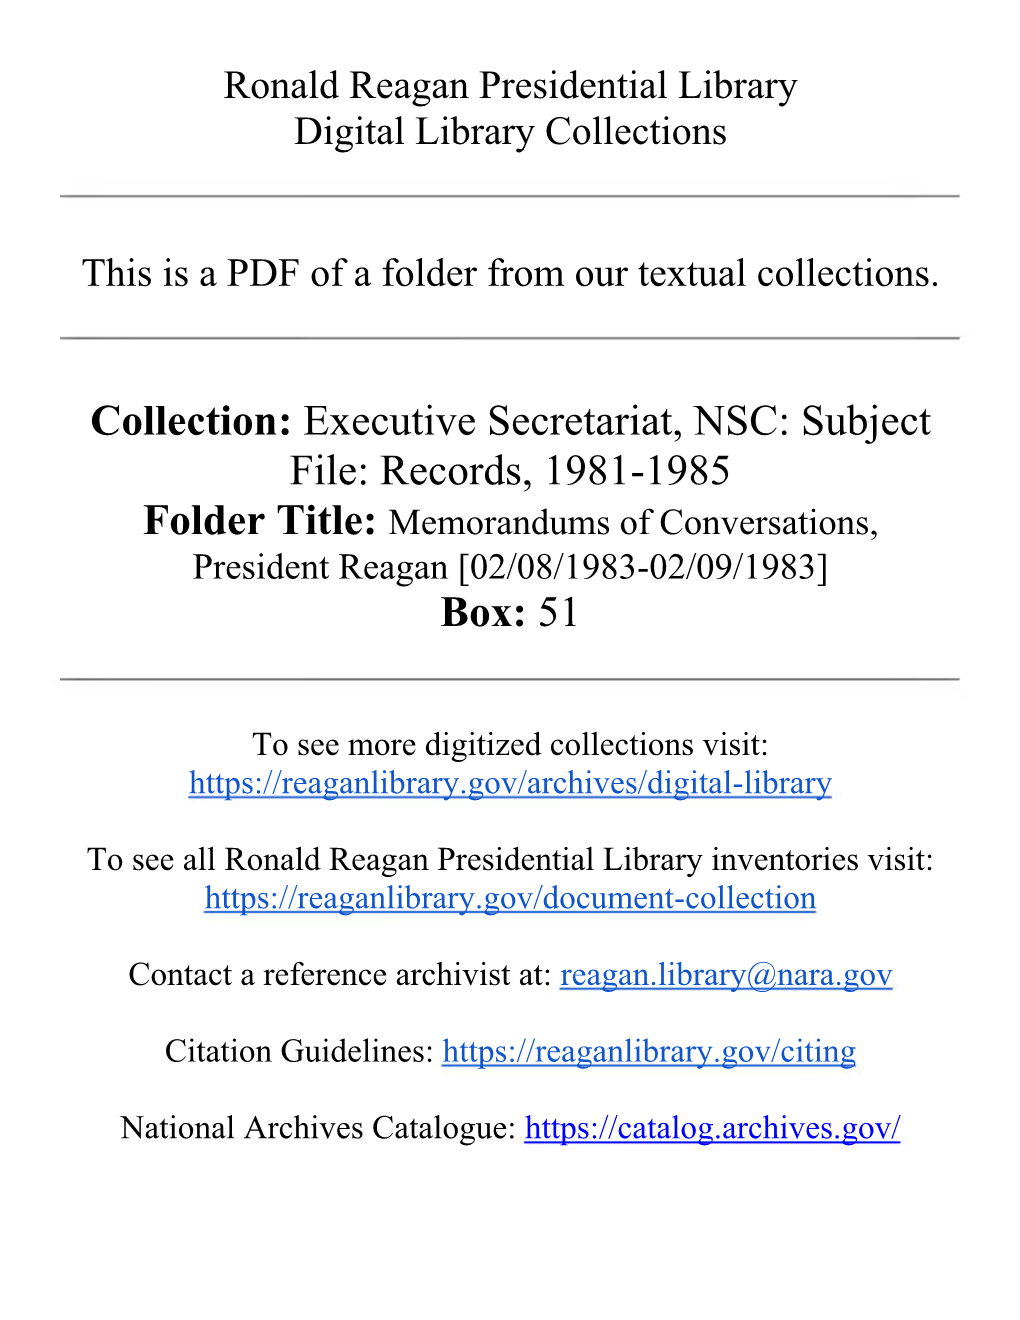 Subject File: Records, 1981-1985 Box: 51